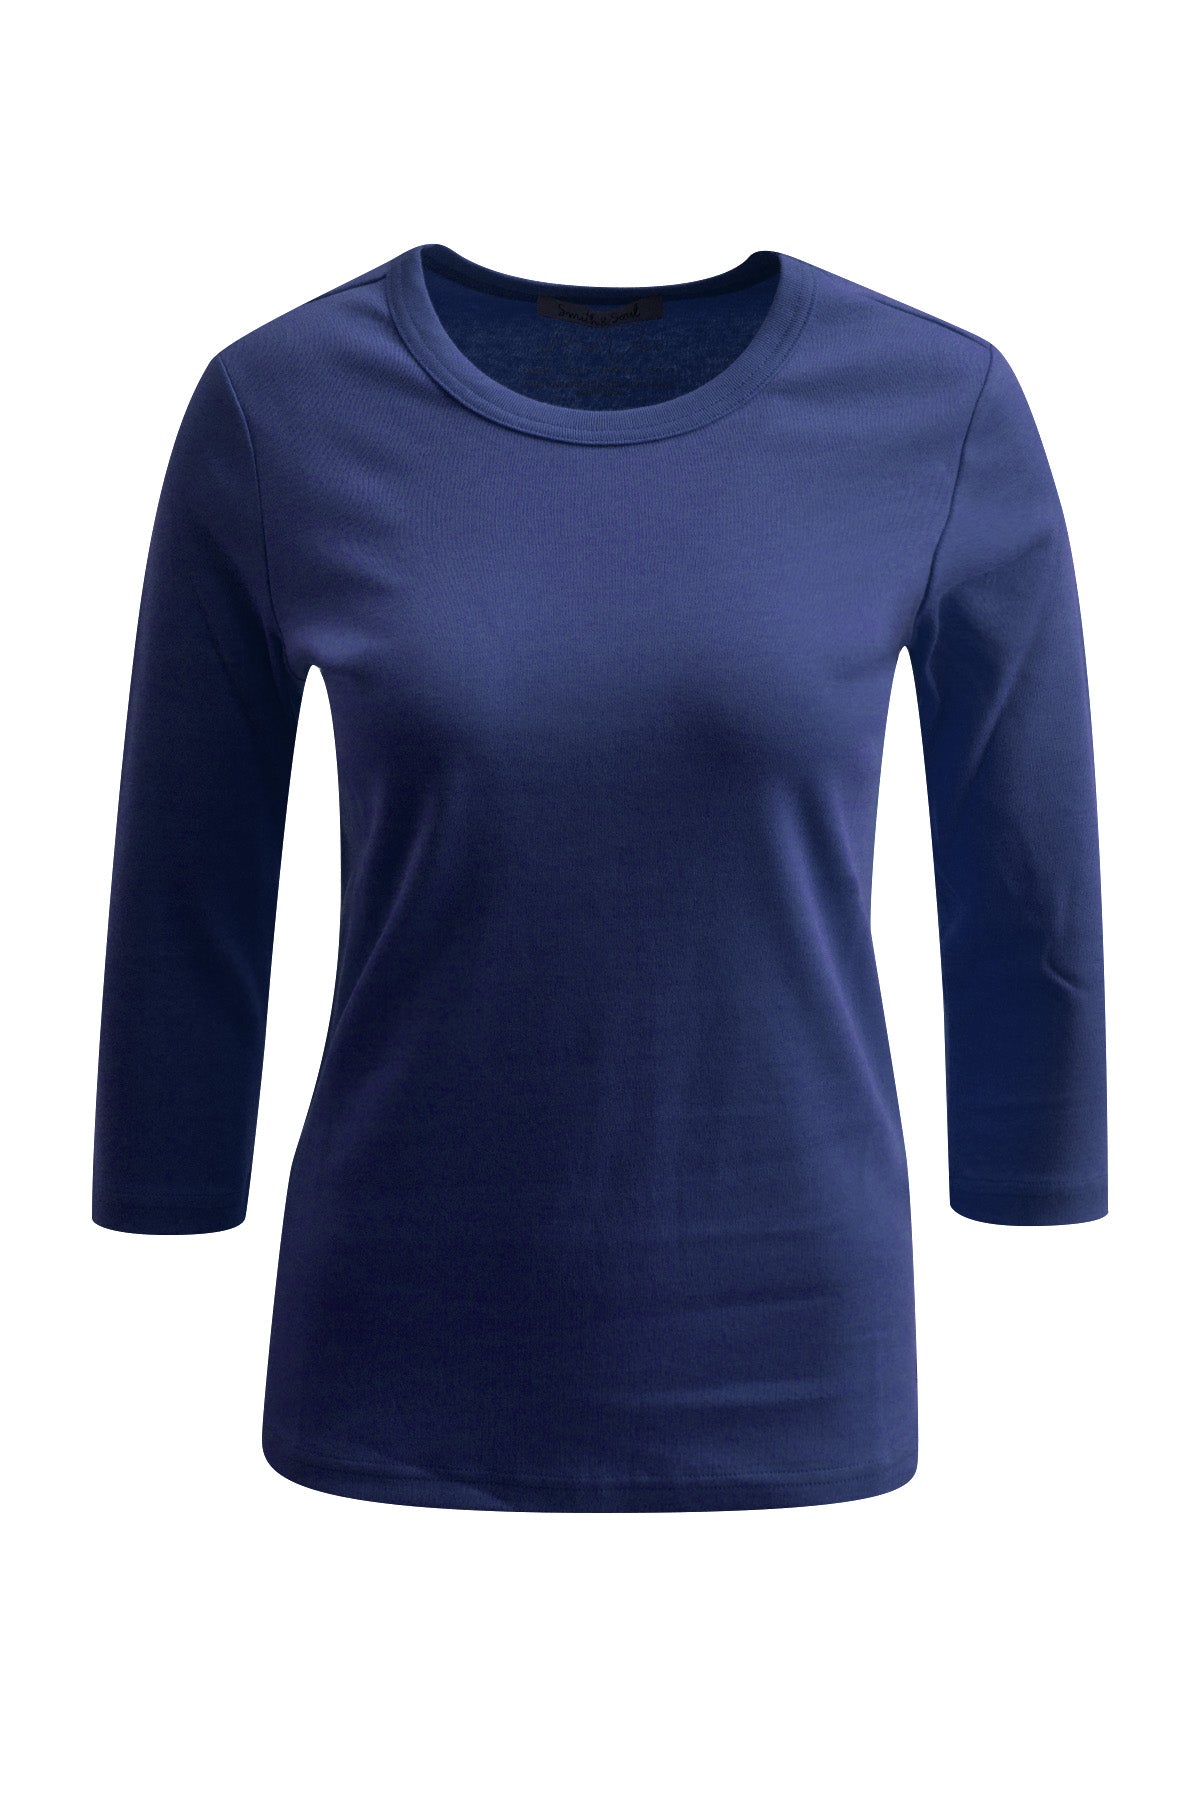 T-shirt 3/4 sleeve - Dark blue